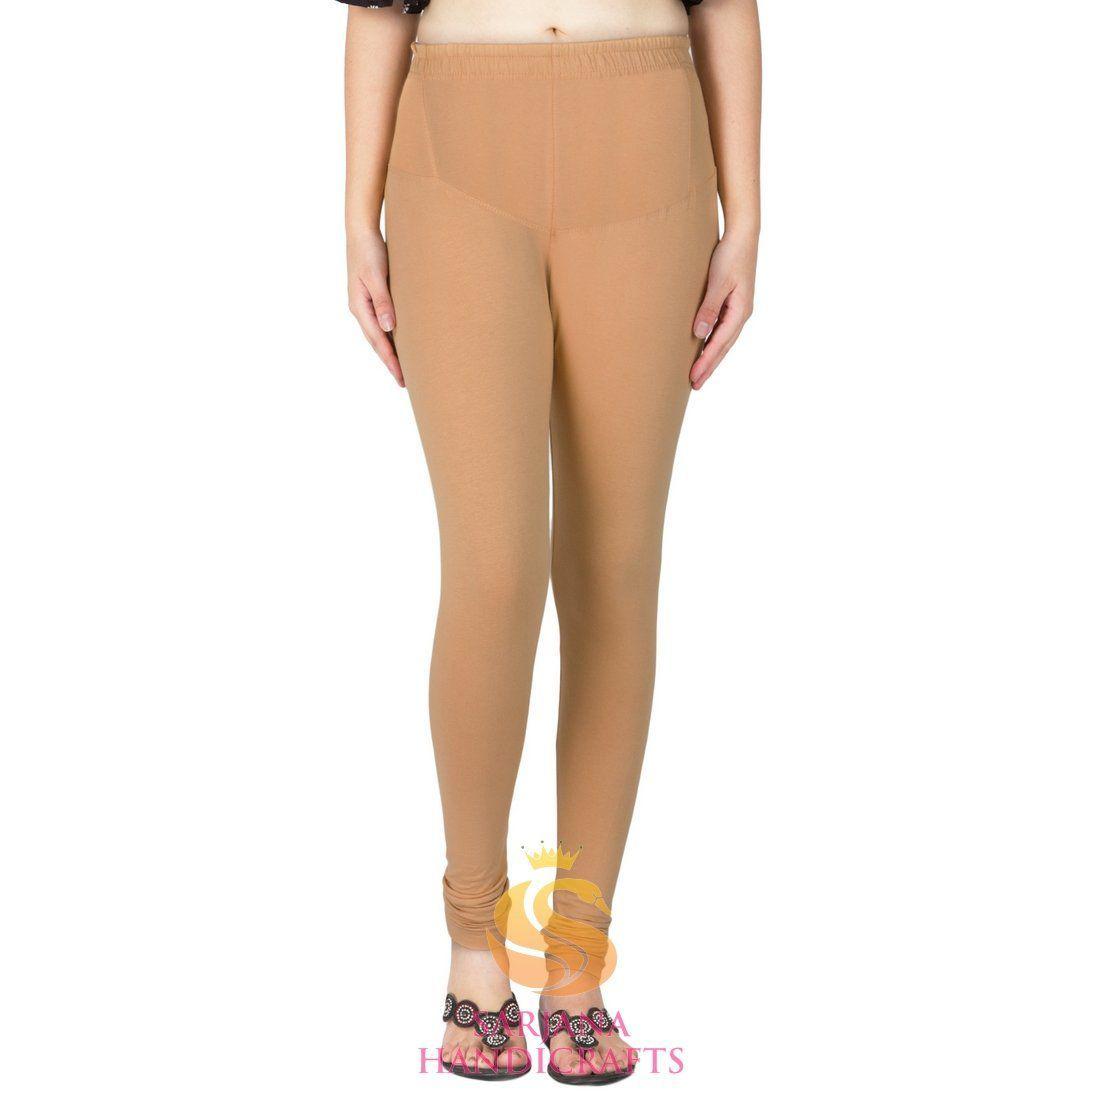 Buy WoMenLi Plus Size Women Cotton Lycra Churidar Pack of 6 Legging (S)  Multicolour at Amazon.in